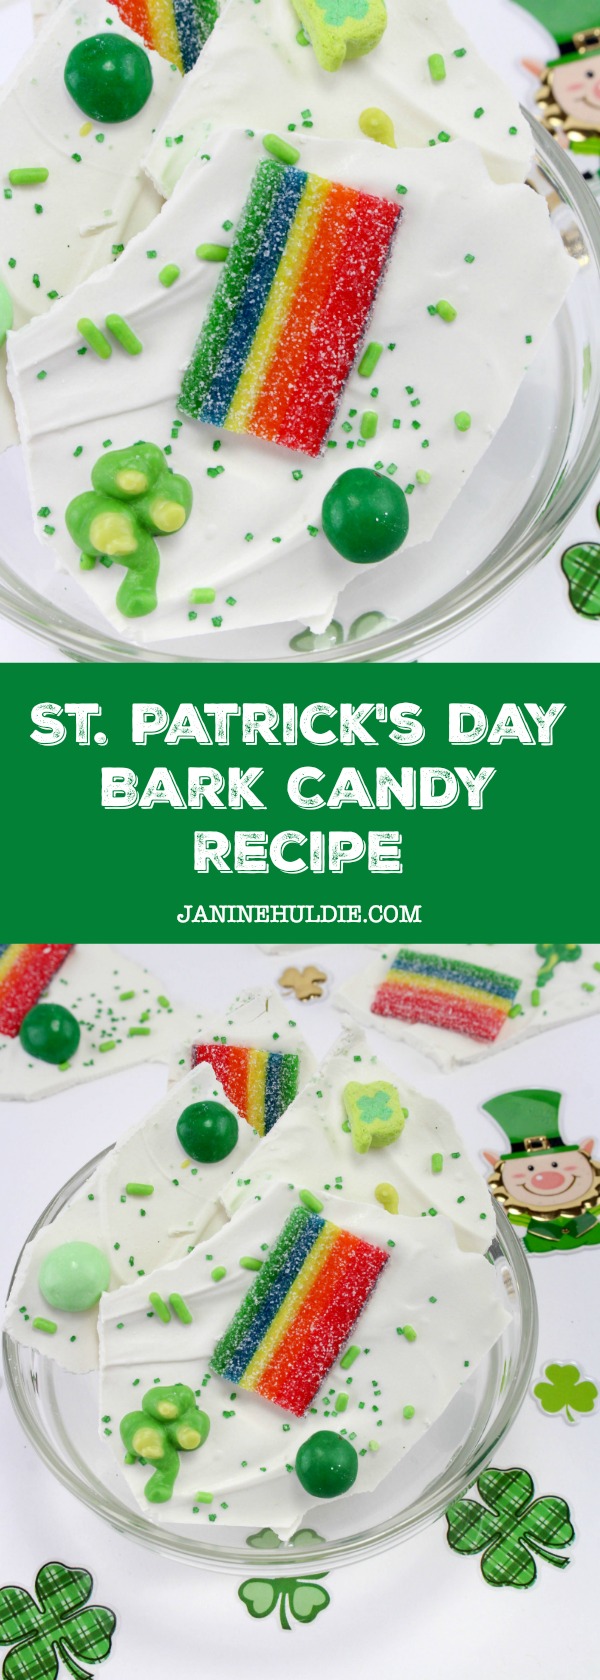 St. Patrick's Day Bark Candy Recipe